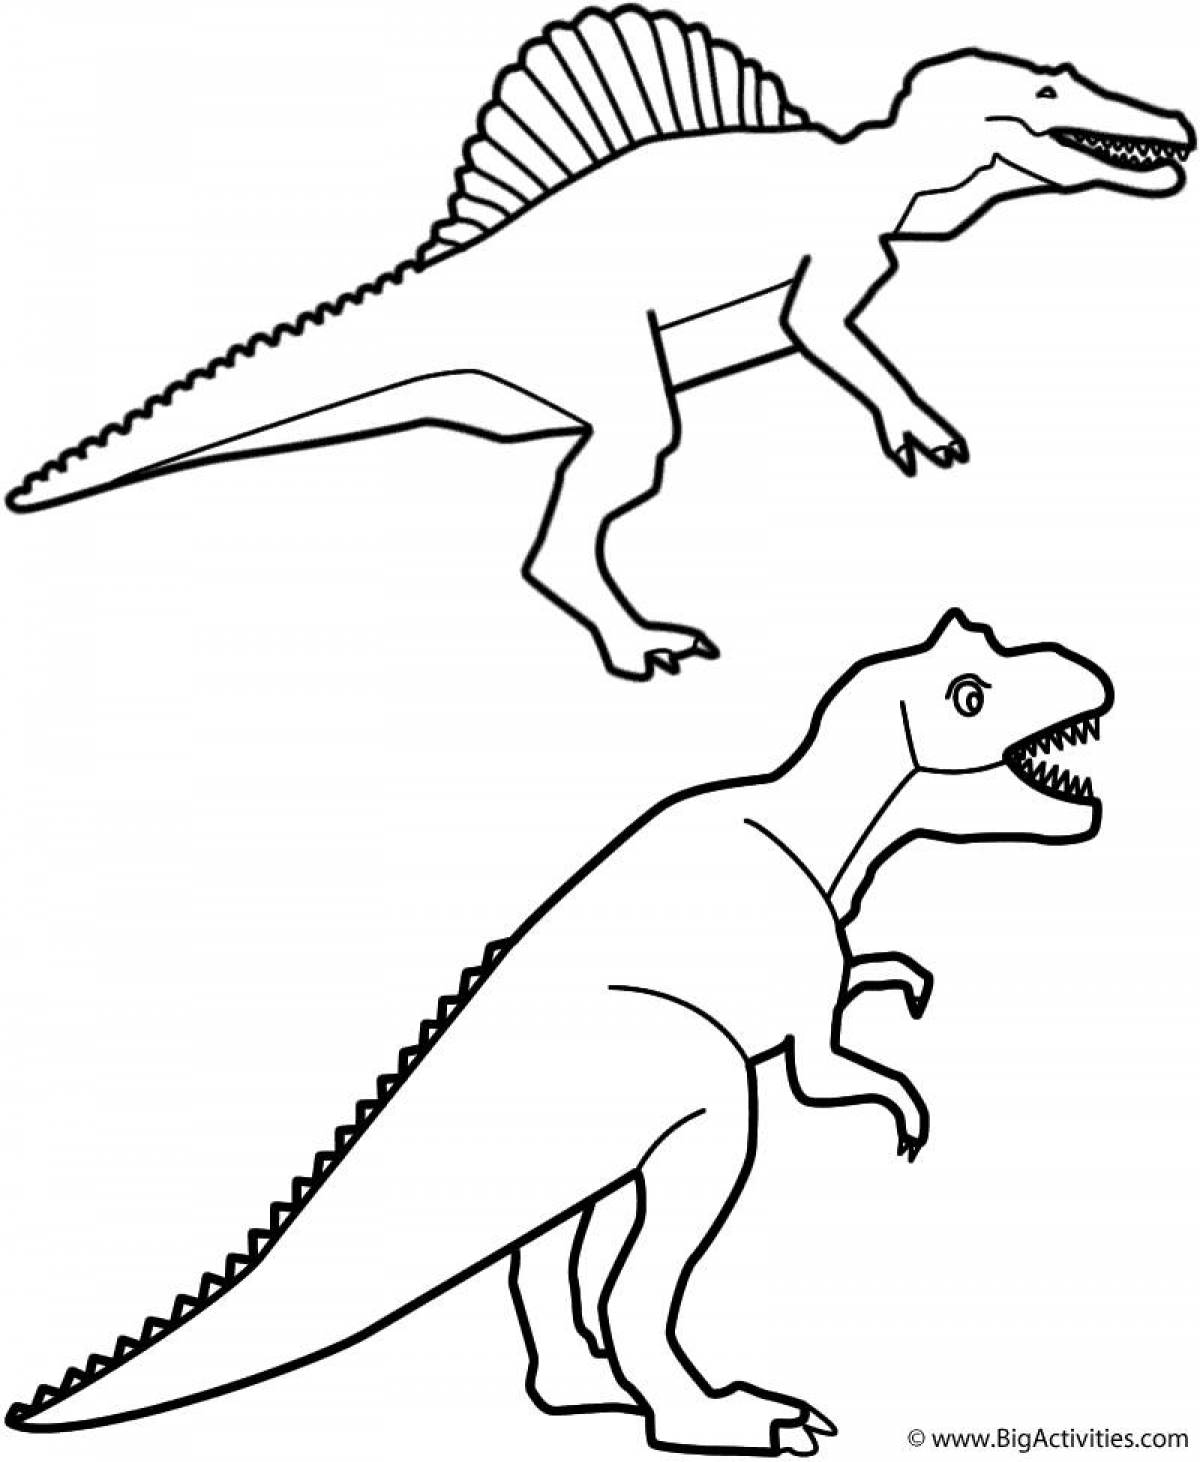 Coloring page elegant spinosaurus